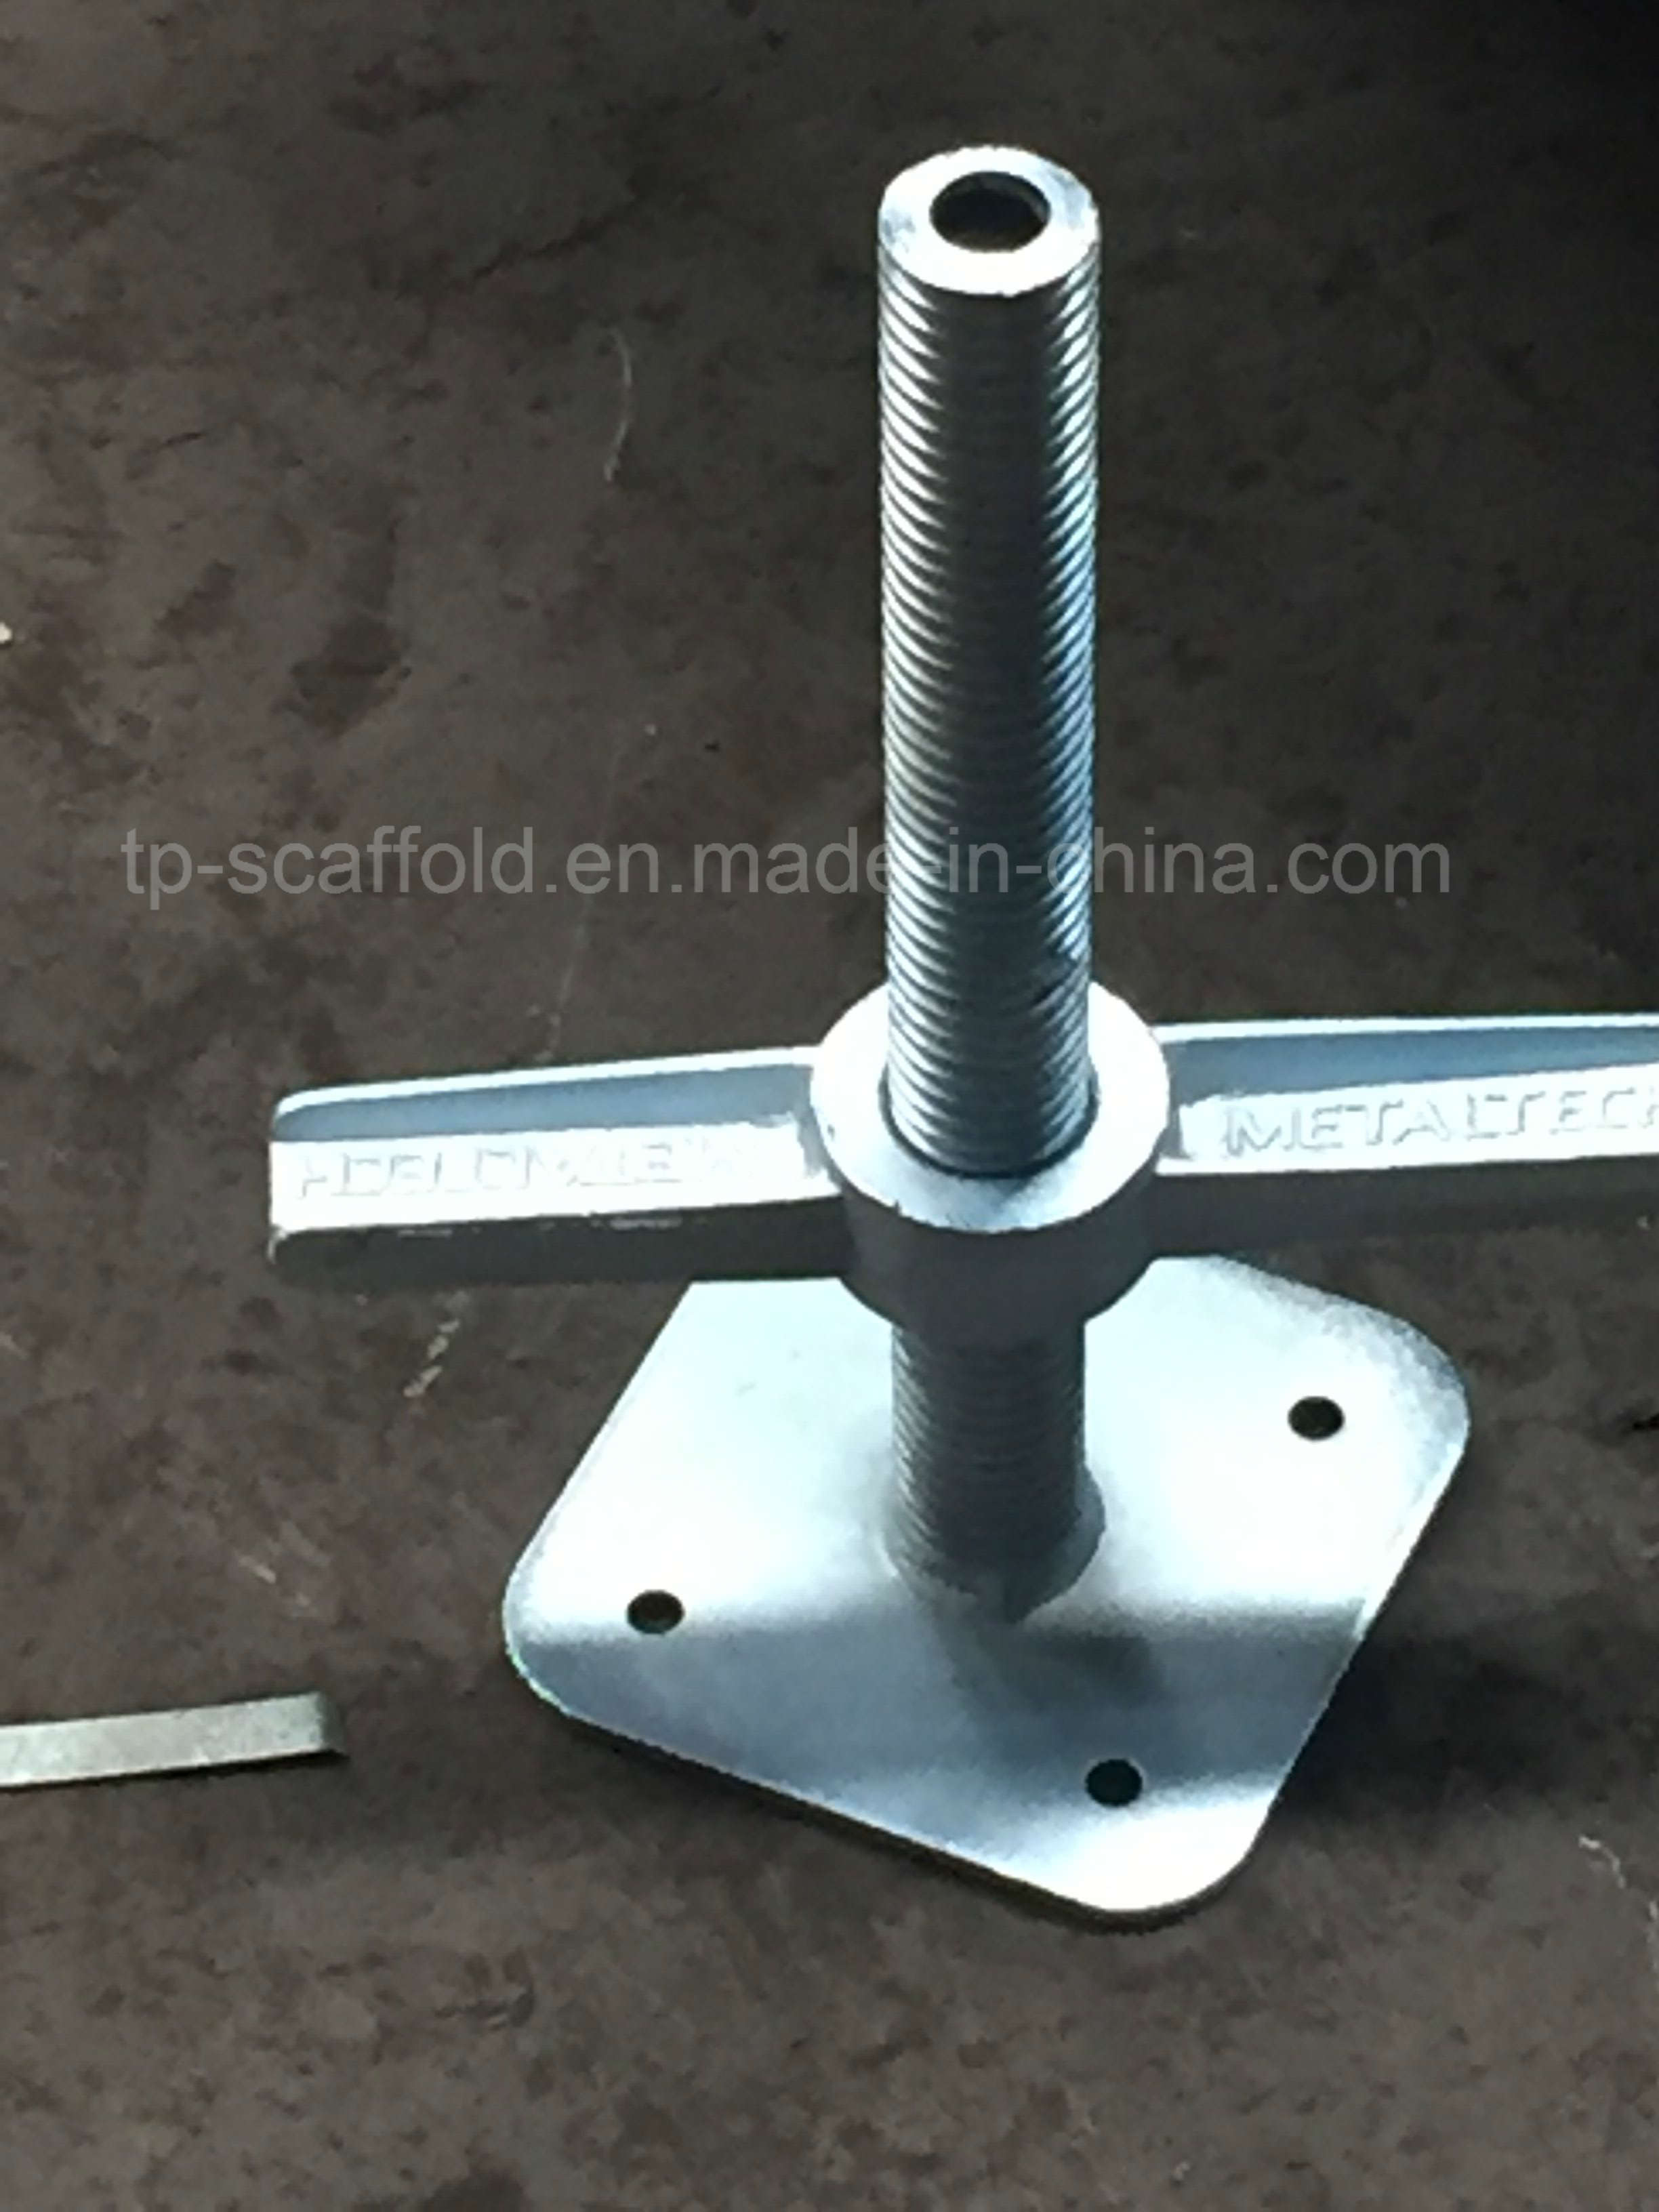 Steel Galvanized Scaffolding/Scaffold Screw Jack